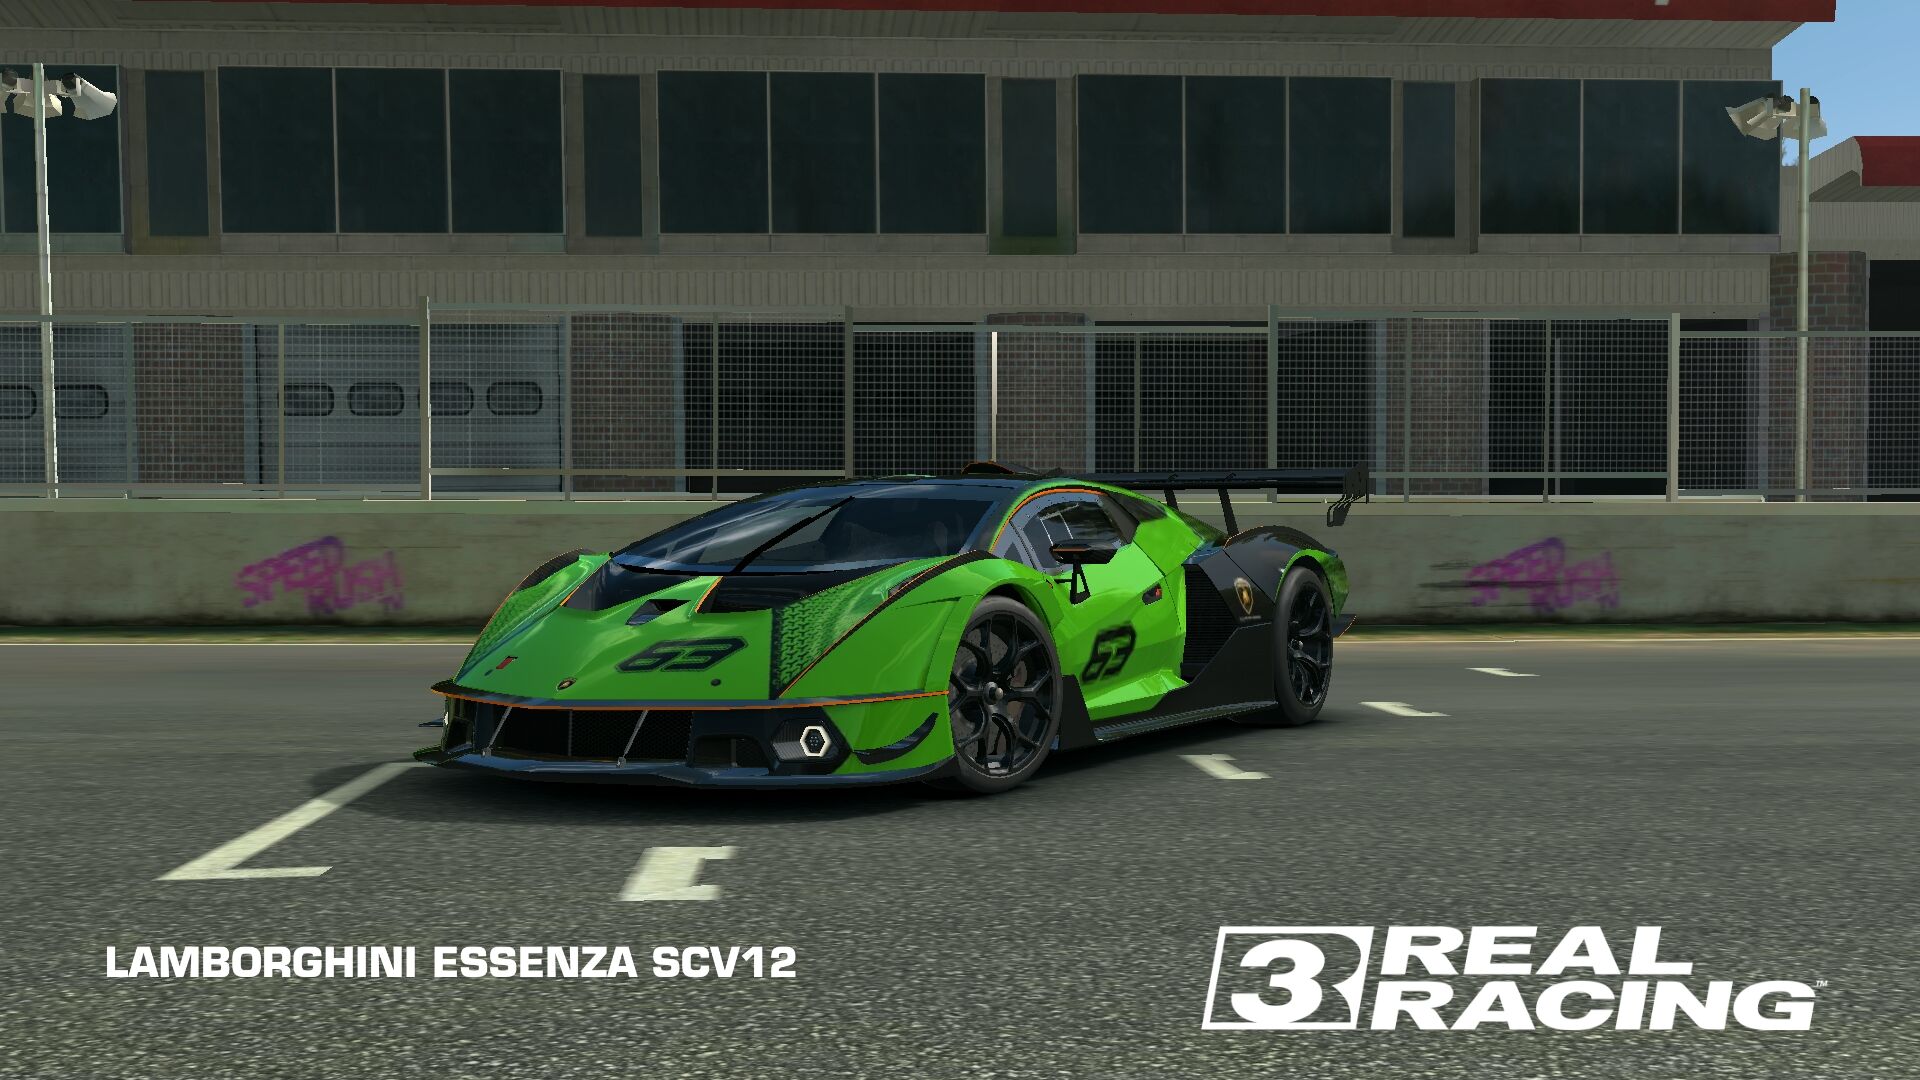 Lamborghini Essenza SCV12 Challenge on Asphalt 9: Legends starts 13th May